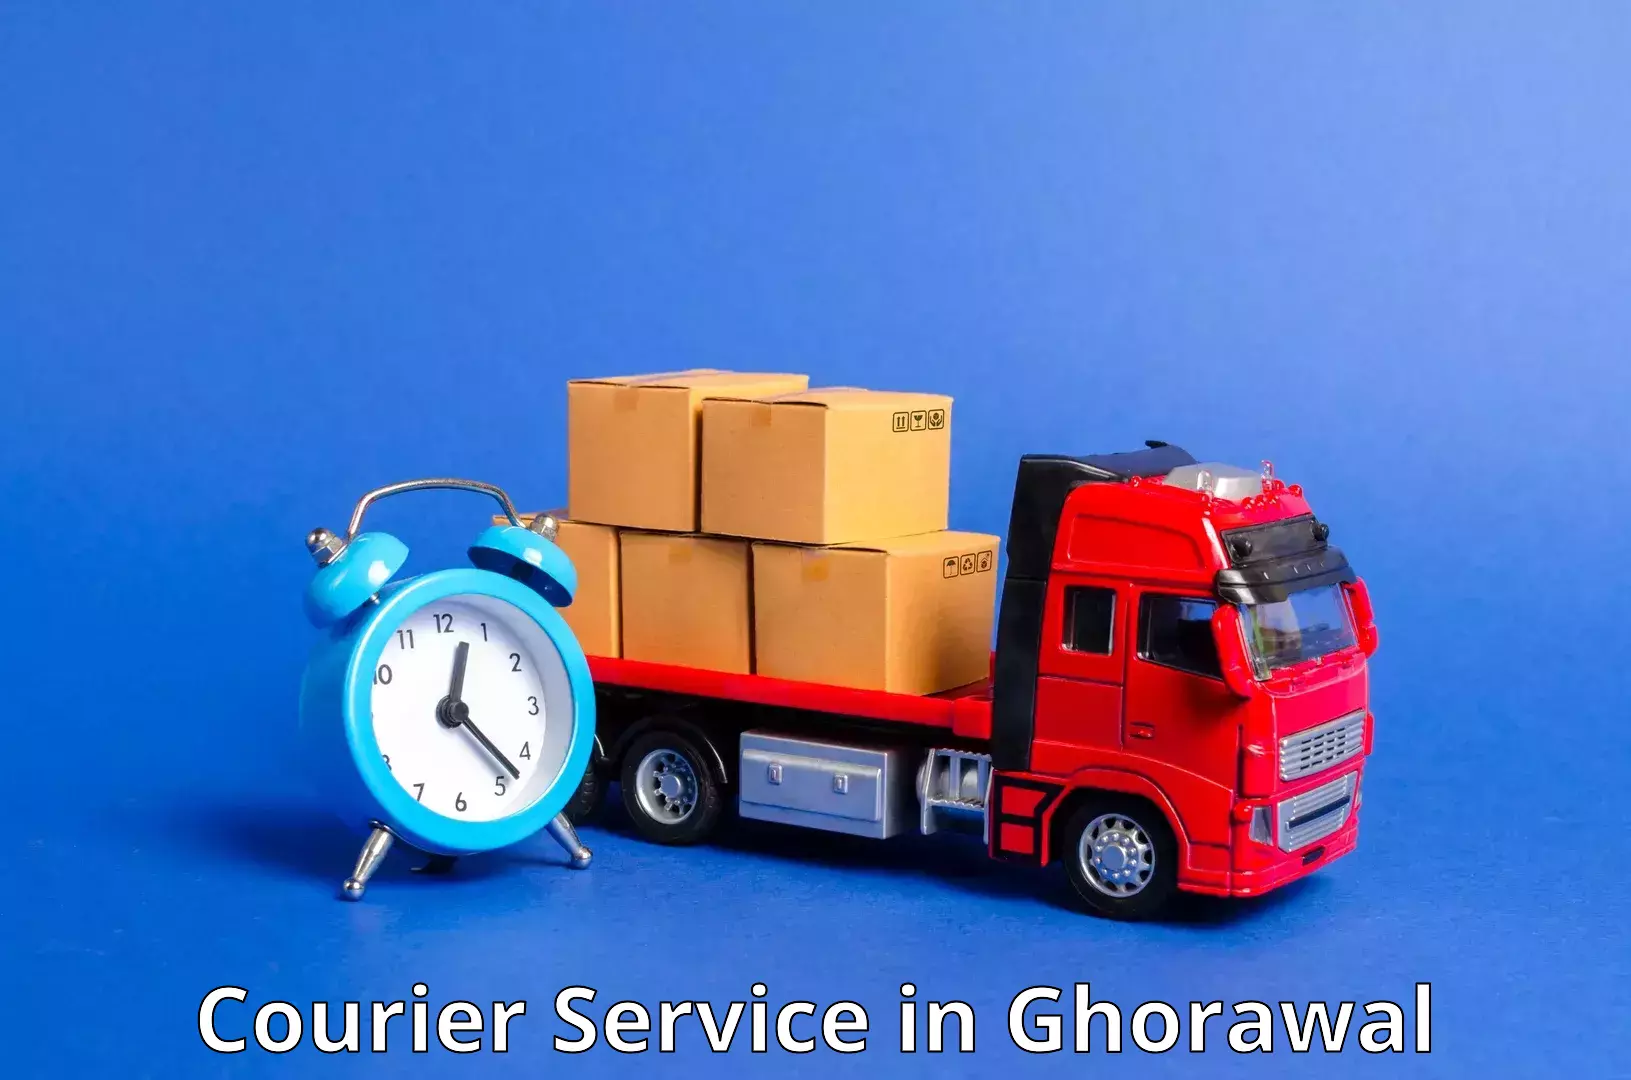 Dynamic parcel delivery in Ghorawal